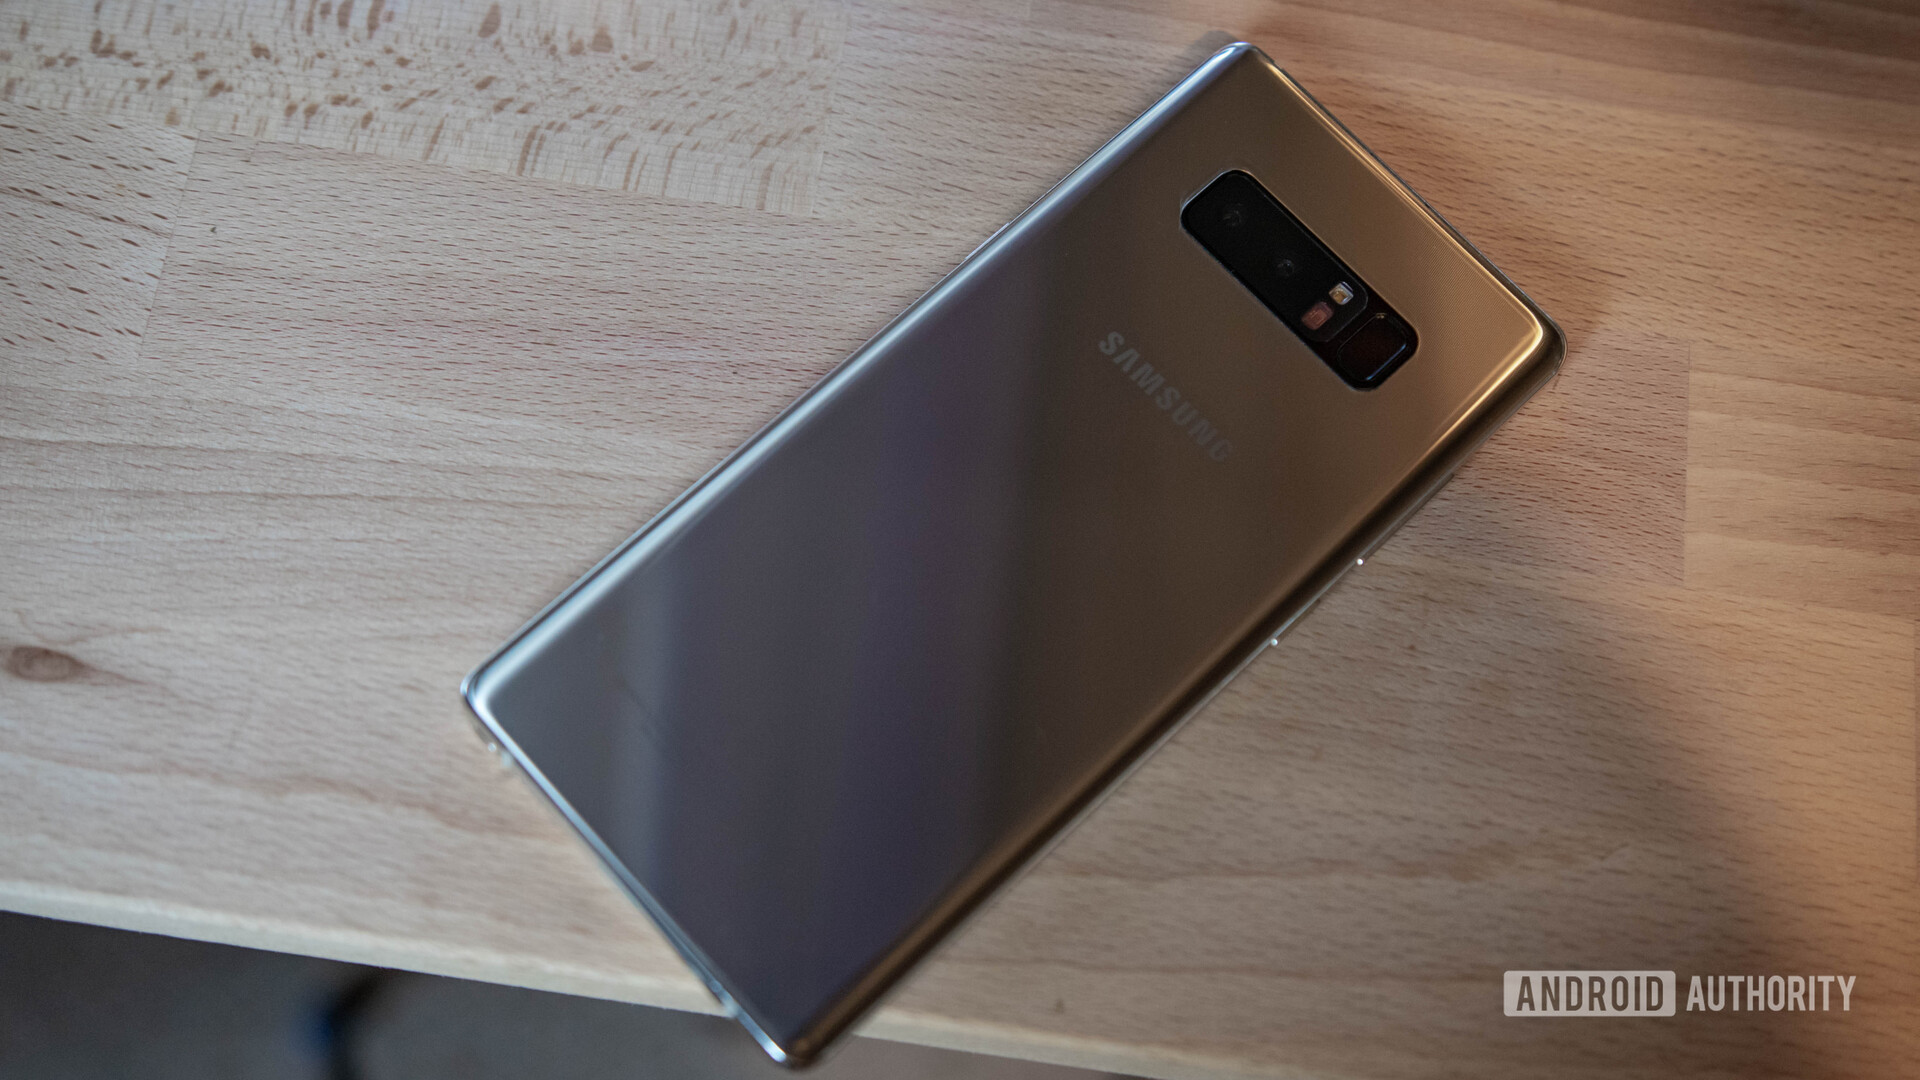 Samsung Galaxy Note 8 Rear casing gold color